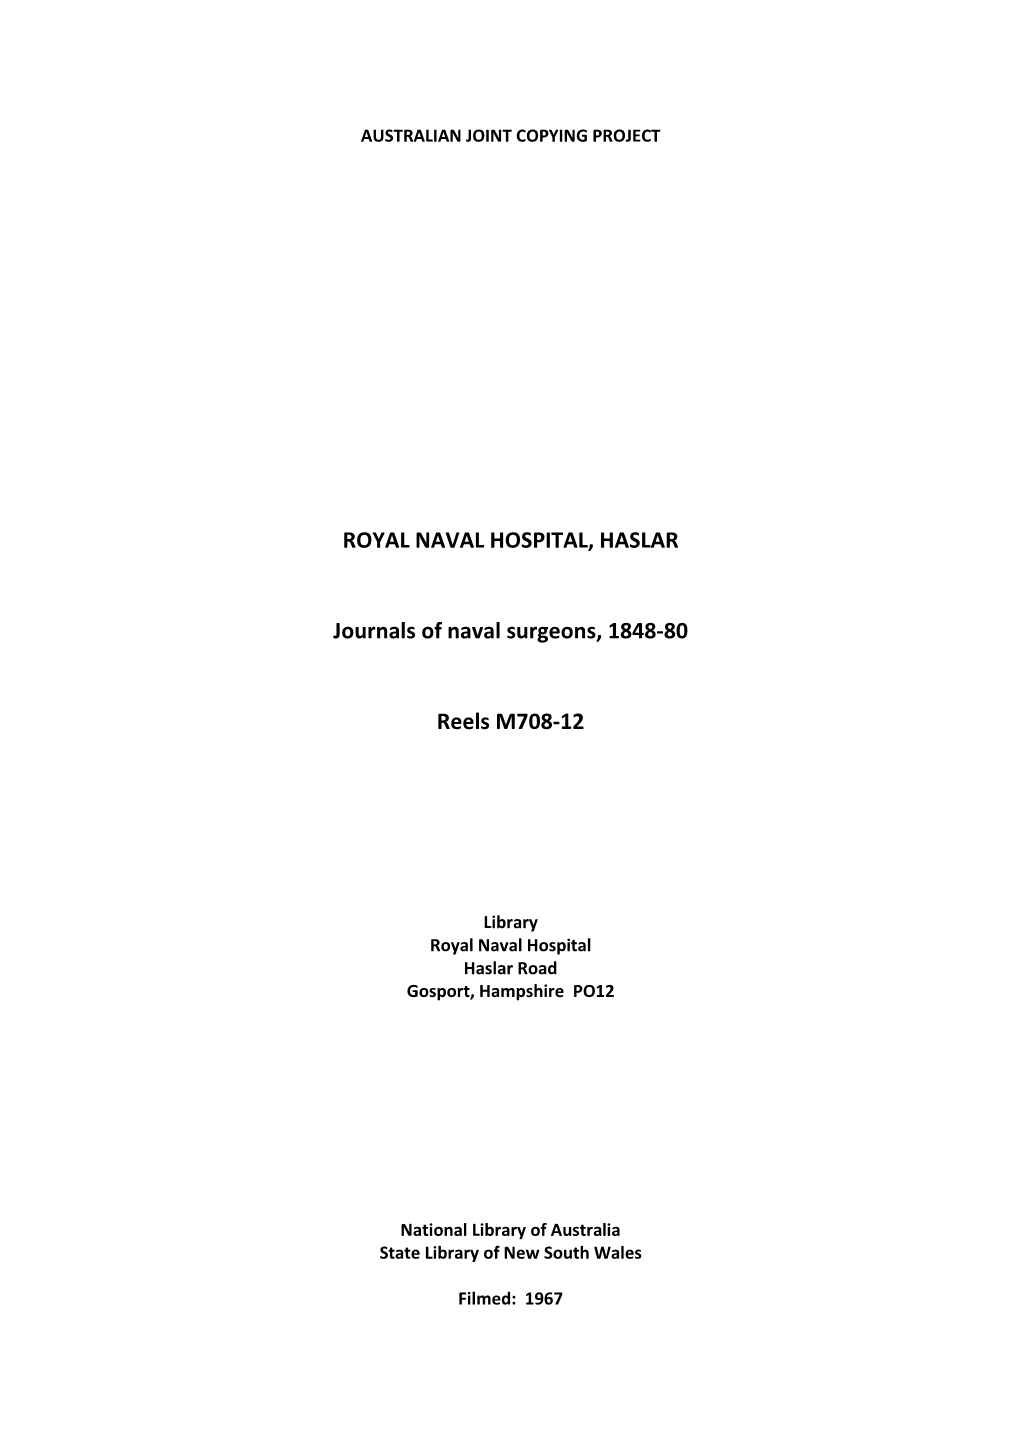 ROYAL NAVAL HOSPITAL, HASLAR Journals of Naval Surgeons, 1848